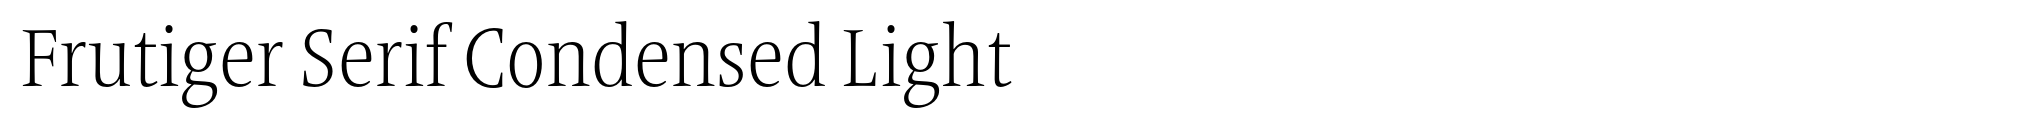 Frutiger Serif Condensed Light image